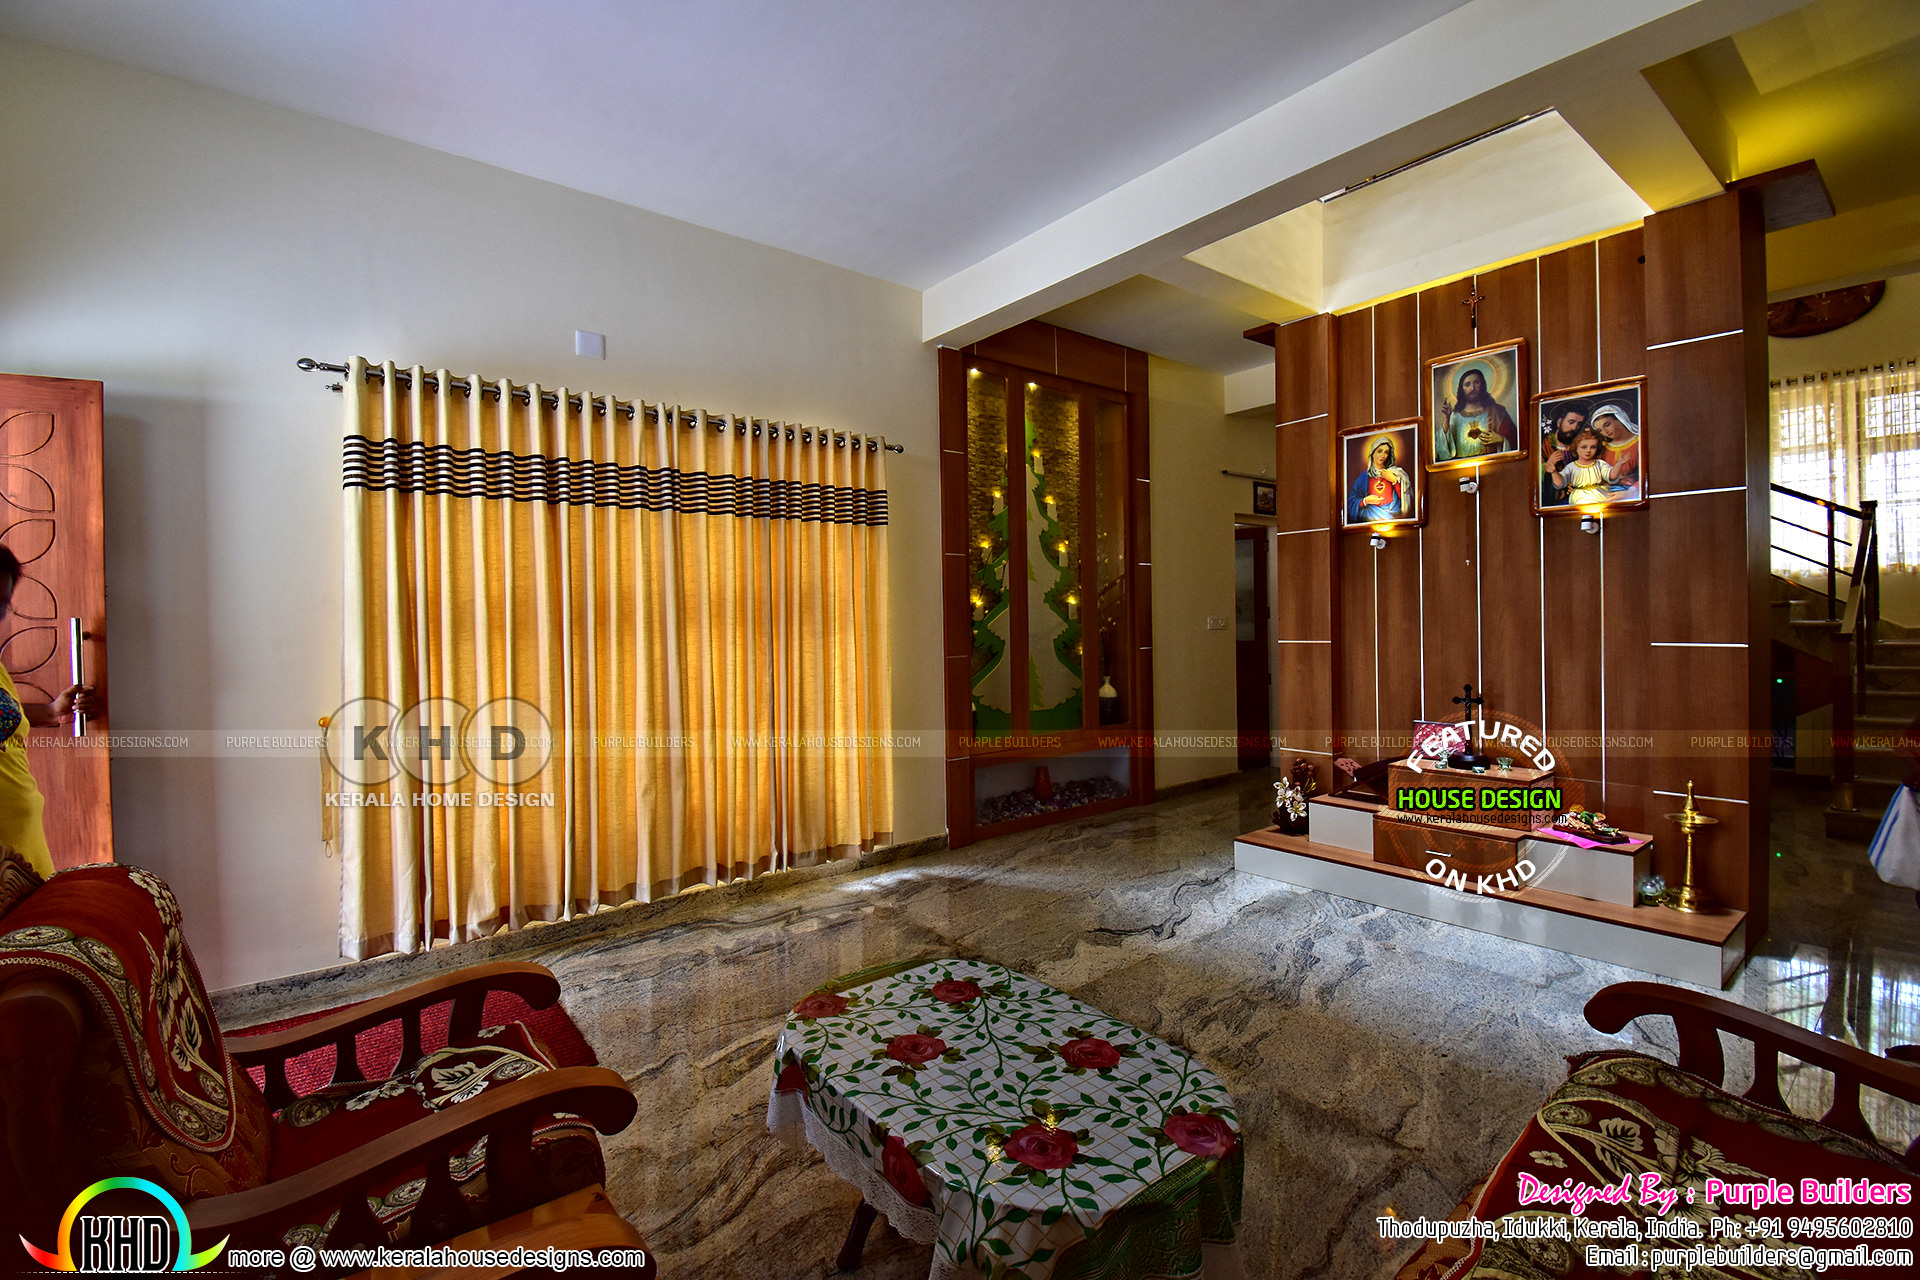 Interior finished 4 bedroom Kerala home plan Kerala home 